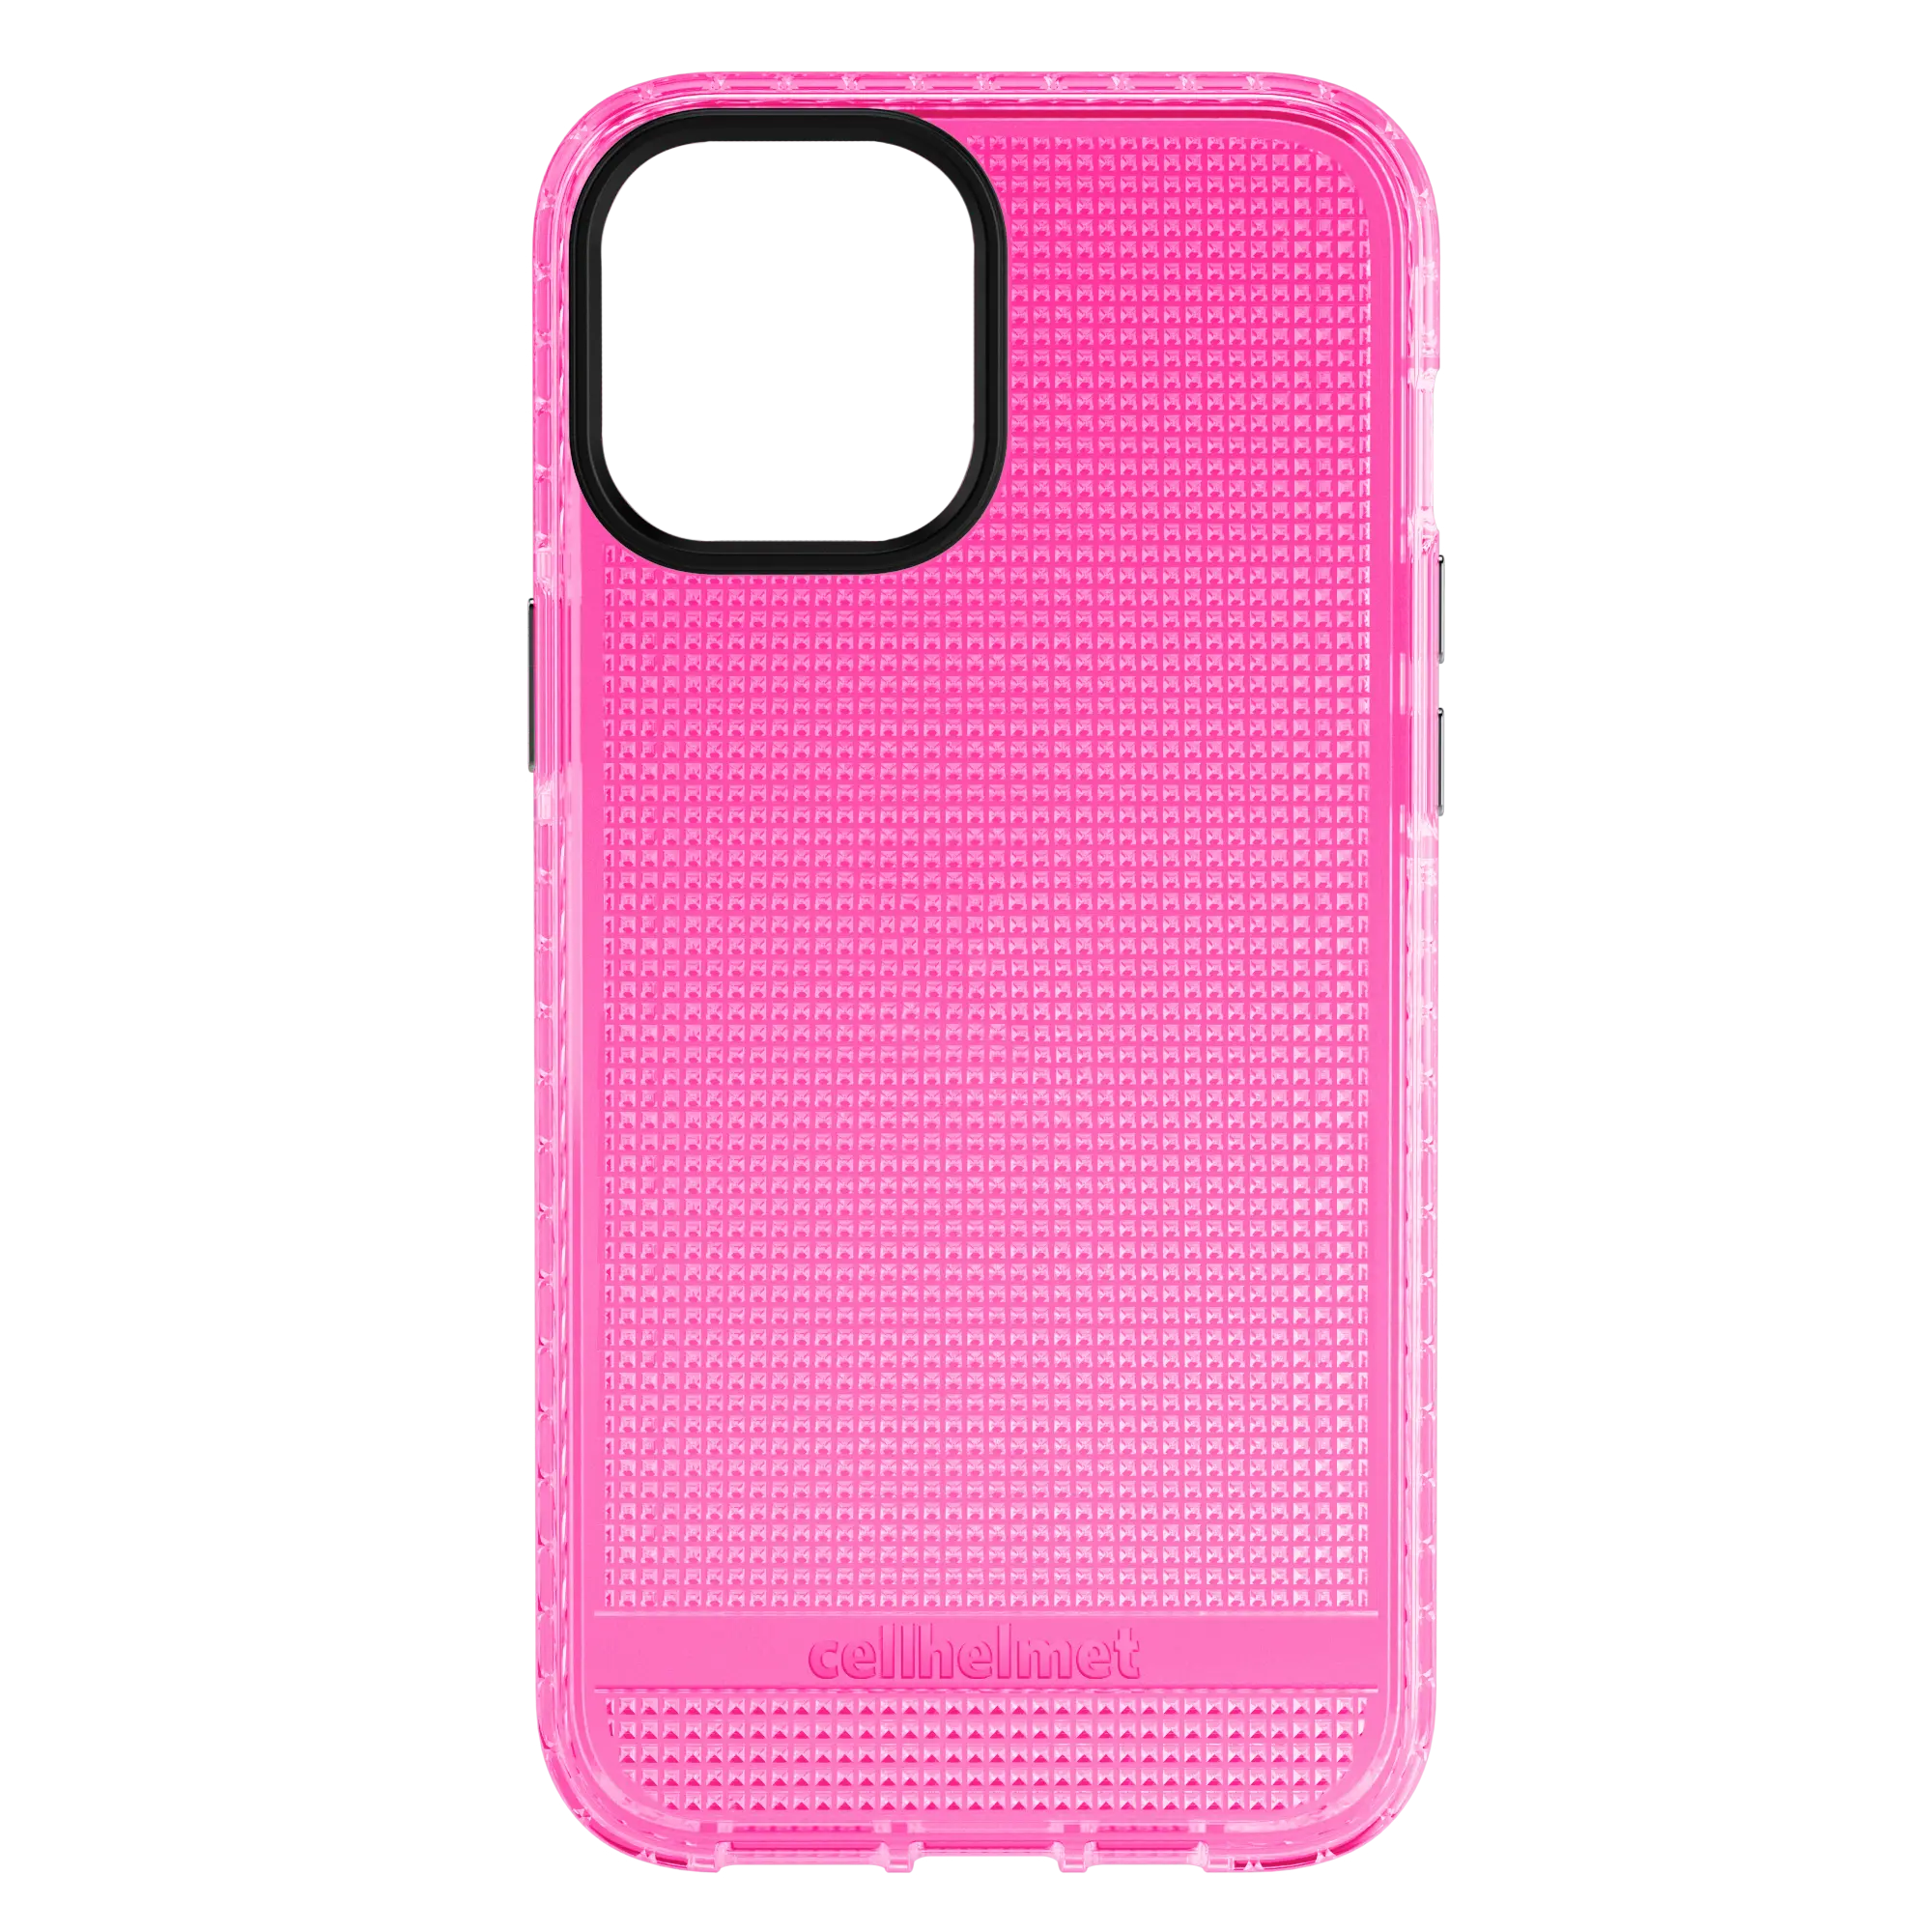 Altitude X Series for Apple iPhone 12 Pro Max  - Pink - Case -  - cellhelmet